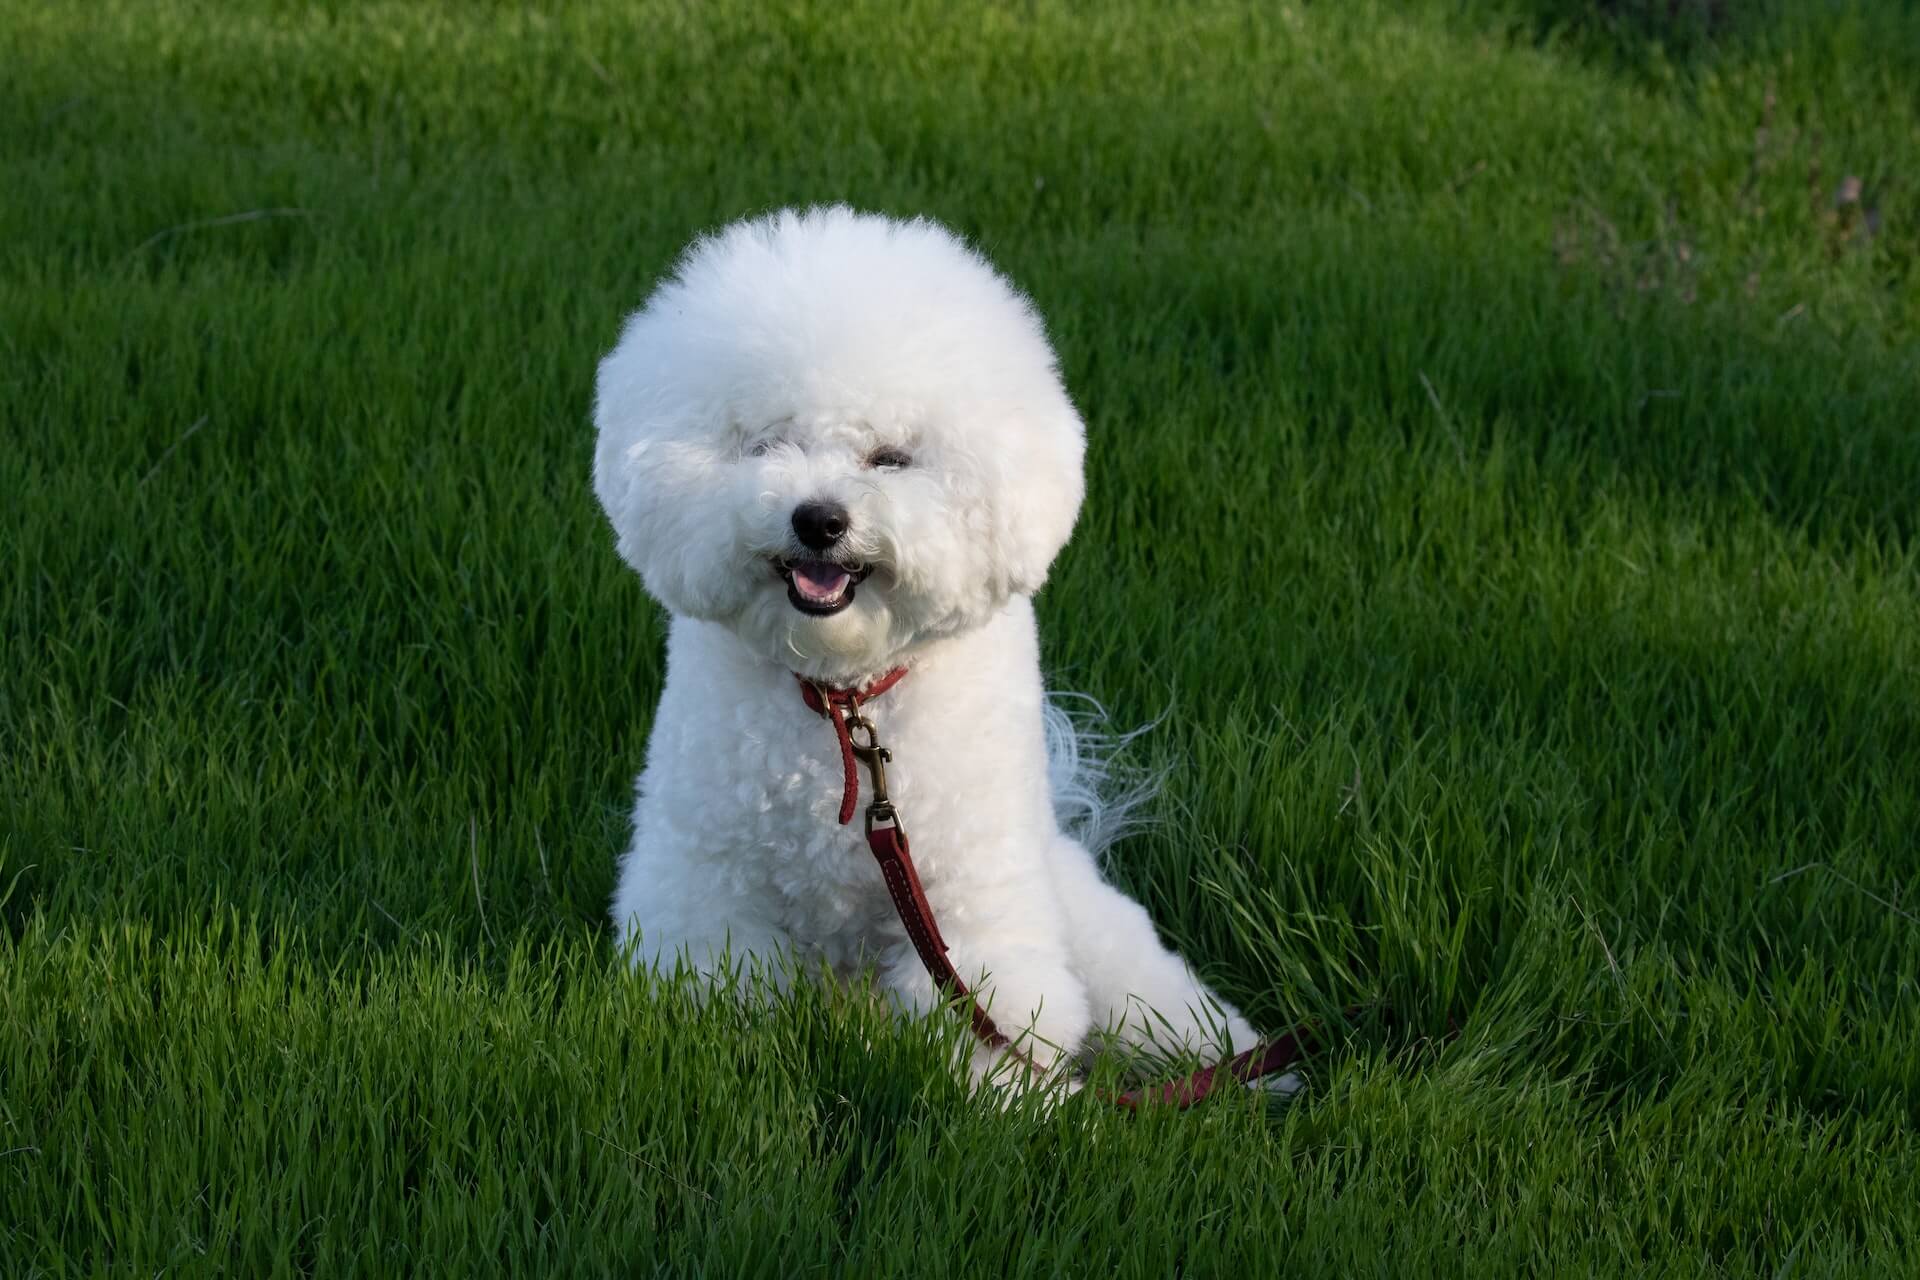 bichon frise dog on the grass